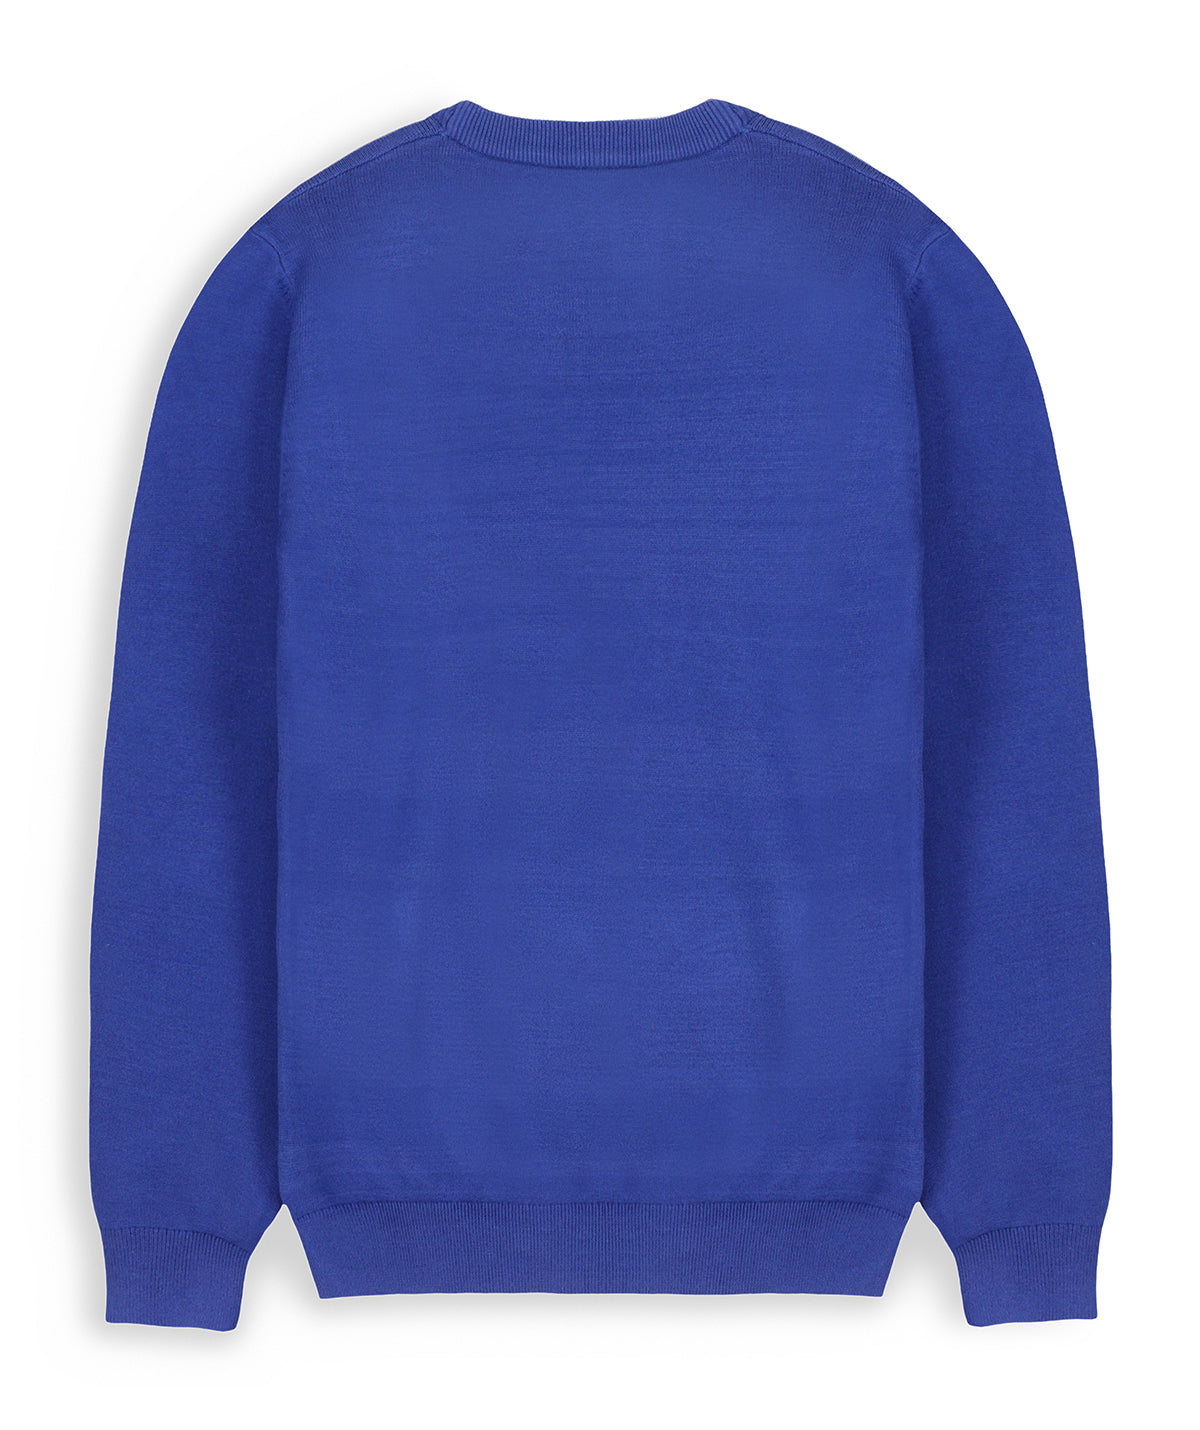 Blue Crew Neck Sweater